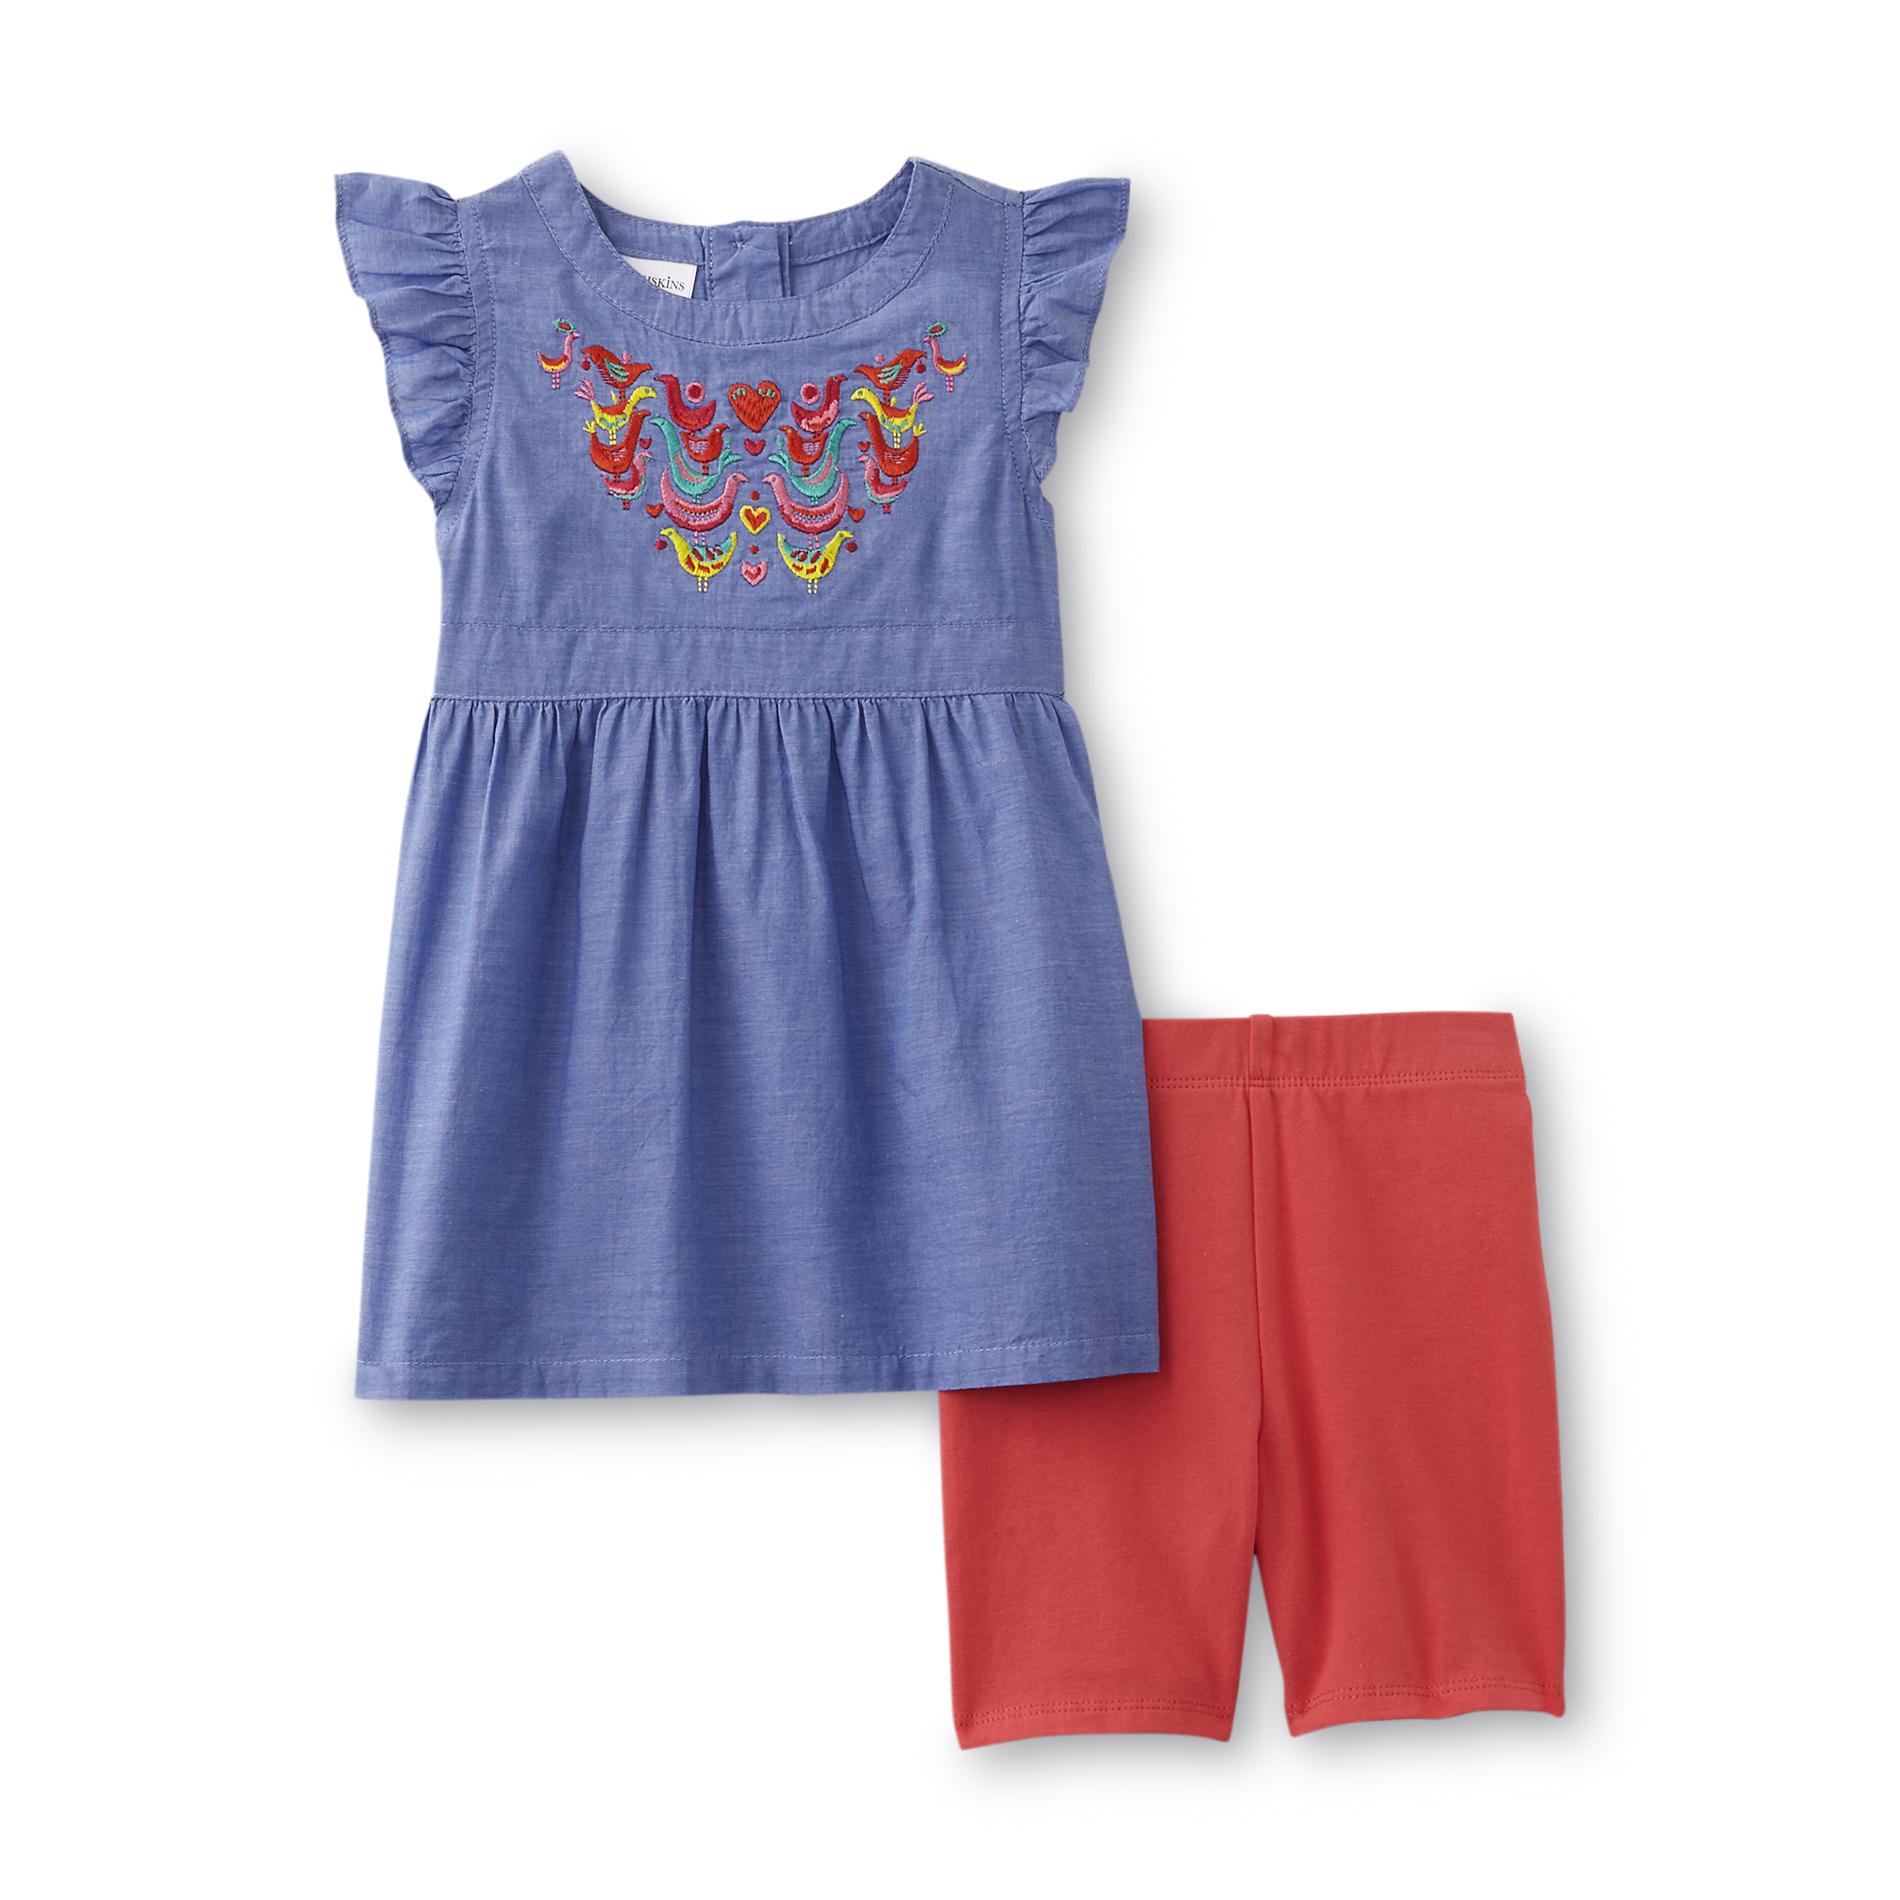 Toughskins Infant & Toddler Girl's Dress & Shorts - Birds